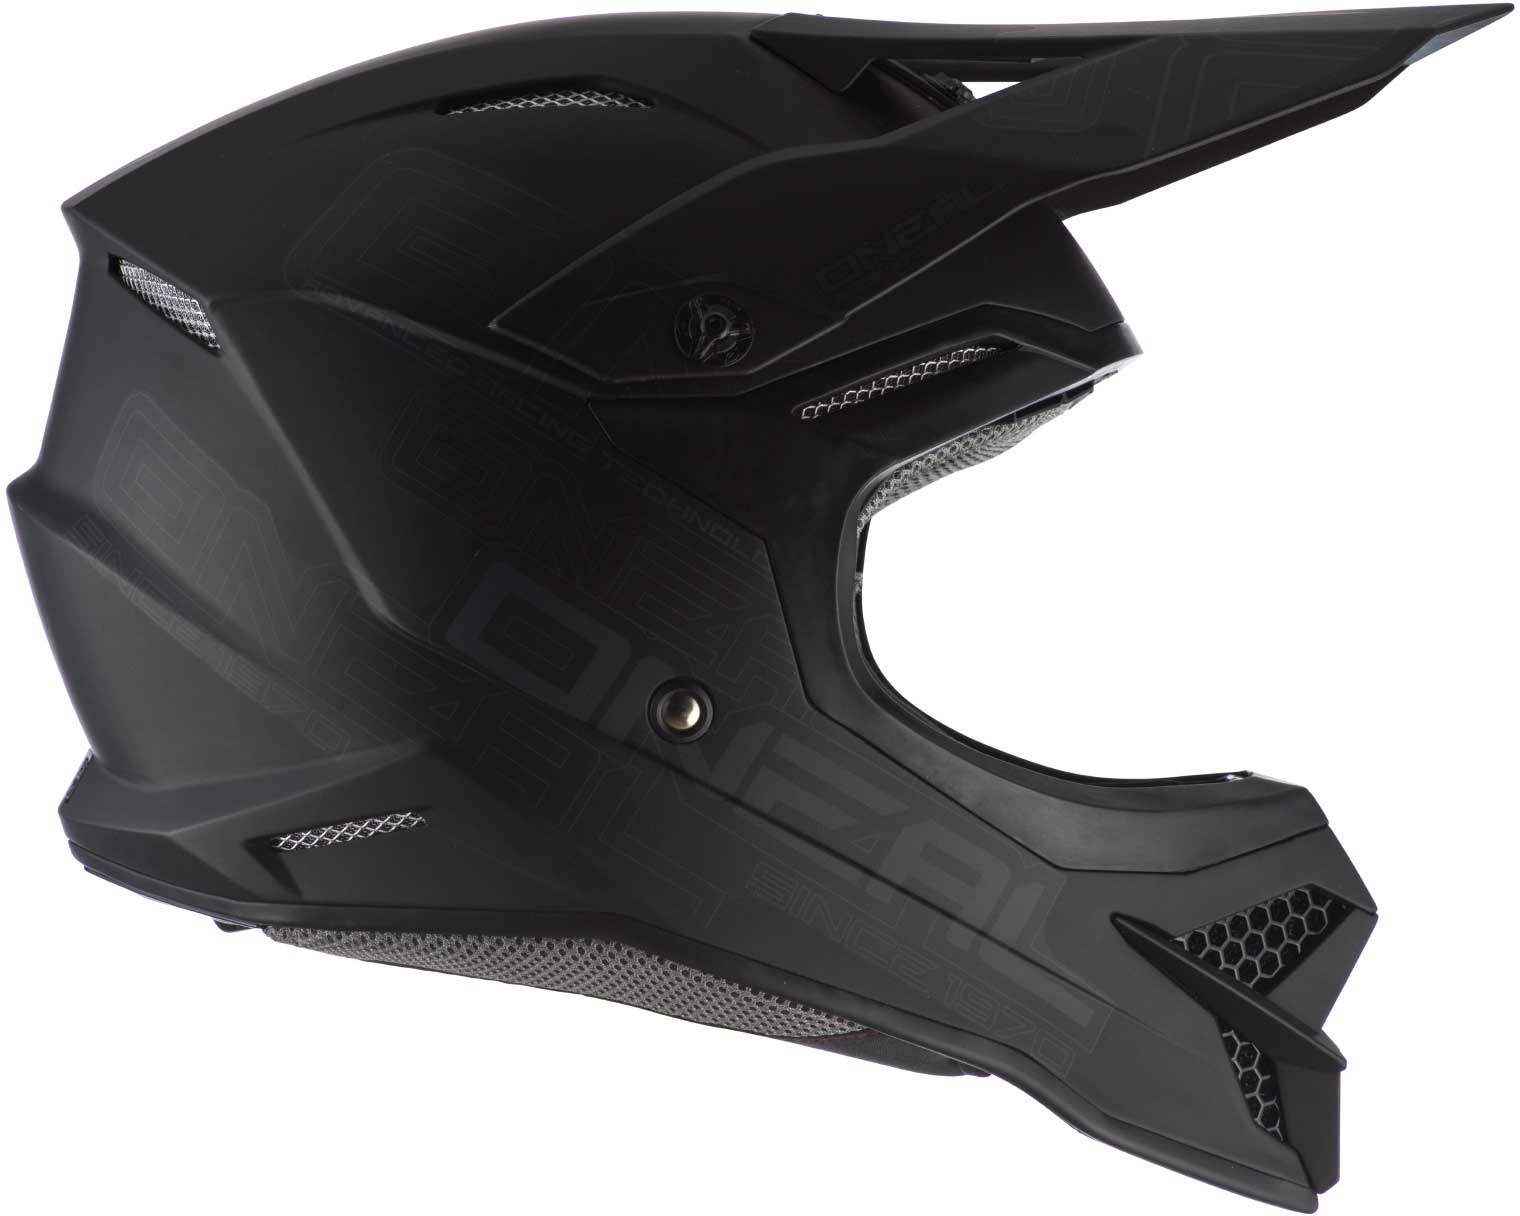 ONeal 3 Series Unisex-Adult Off-Road Helmet Multi, M